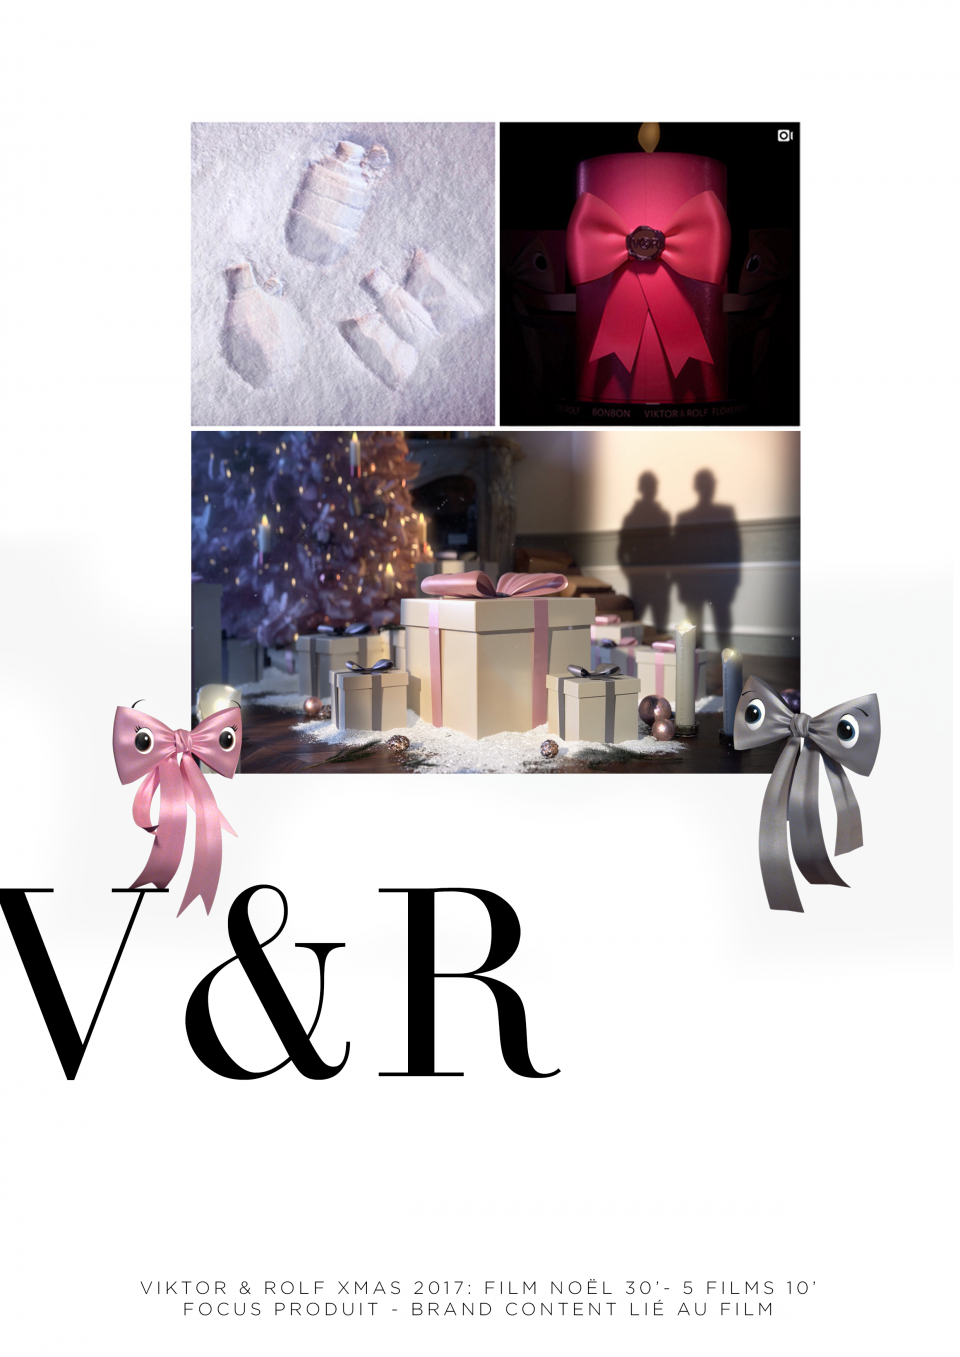 Viktor & Rolf Digital Campaign 2017